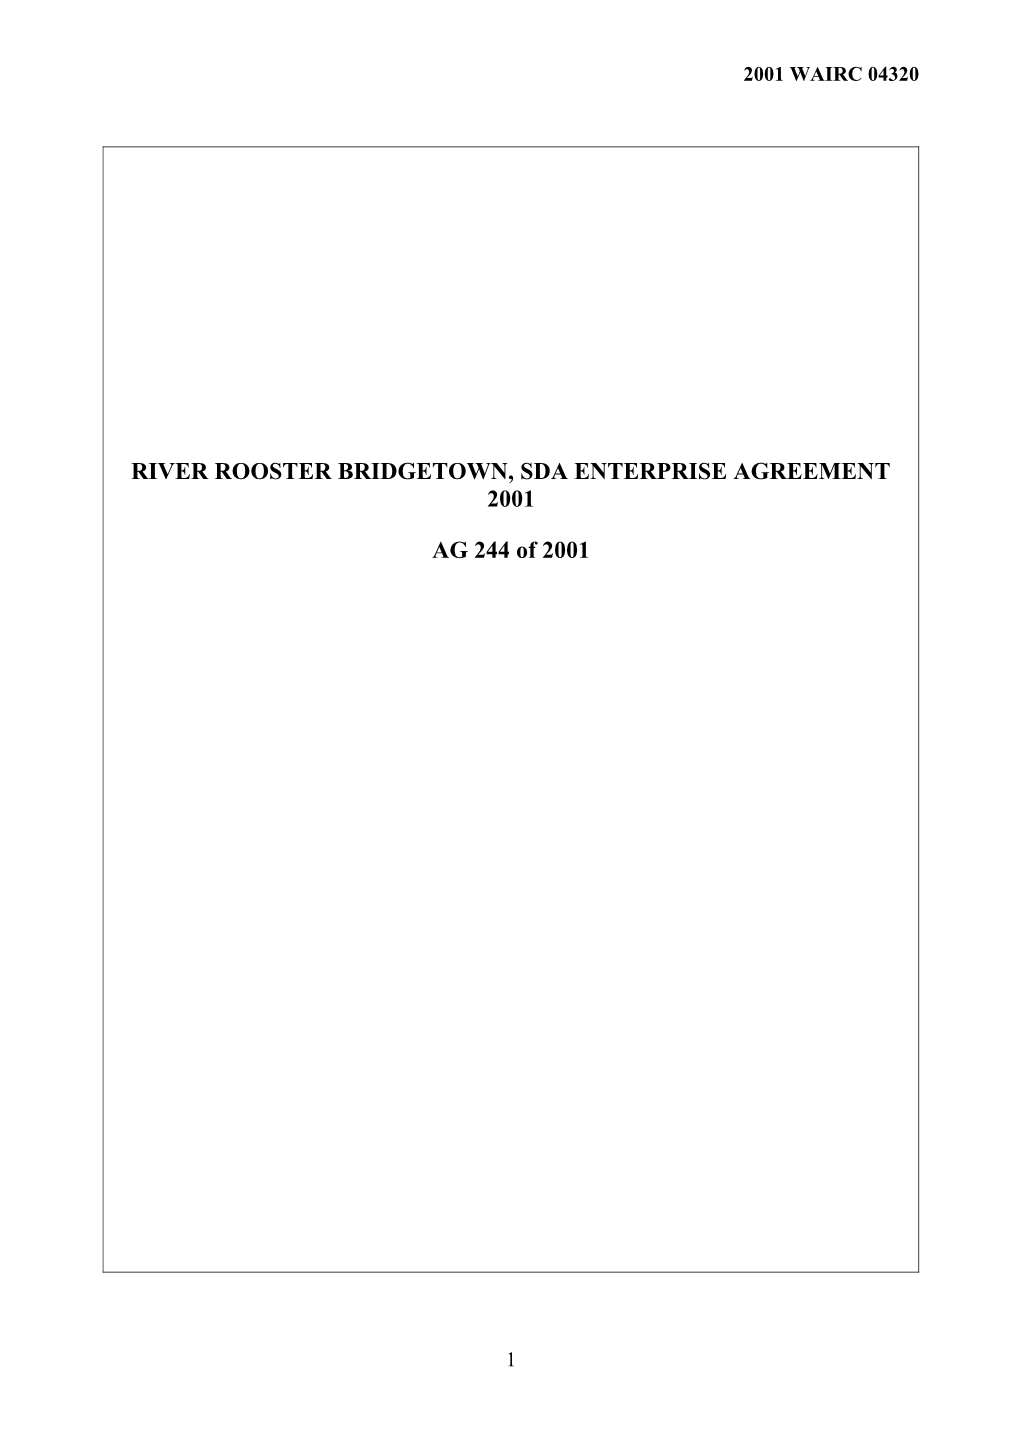 River Rooster Bridgetown, Sda Enterprise Agreement 2001